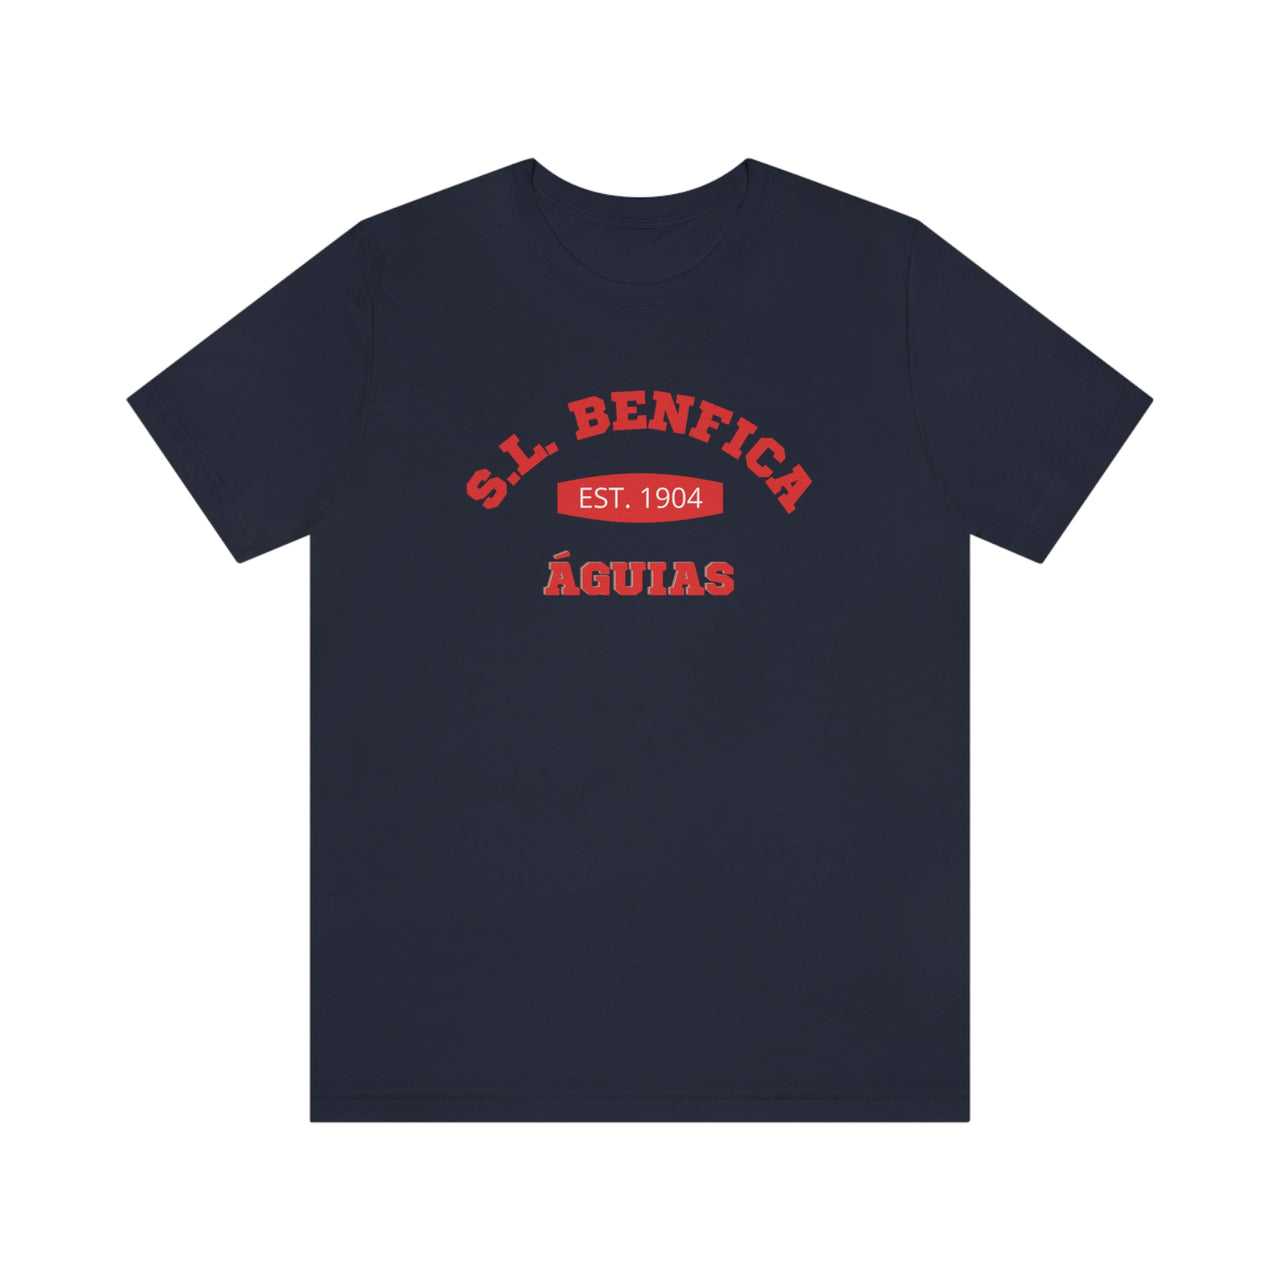 Benfica Unisex Short Sleeve Tee